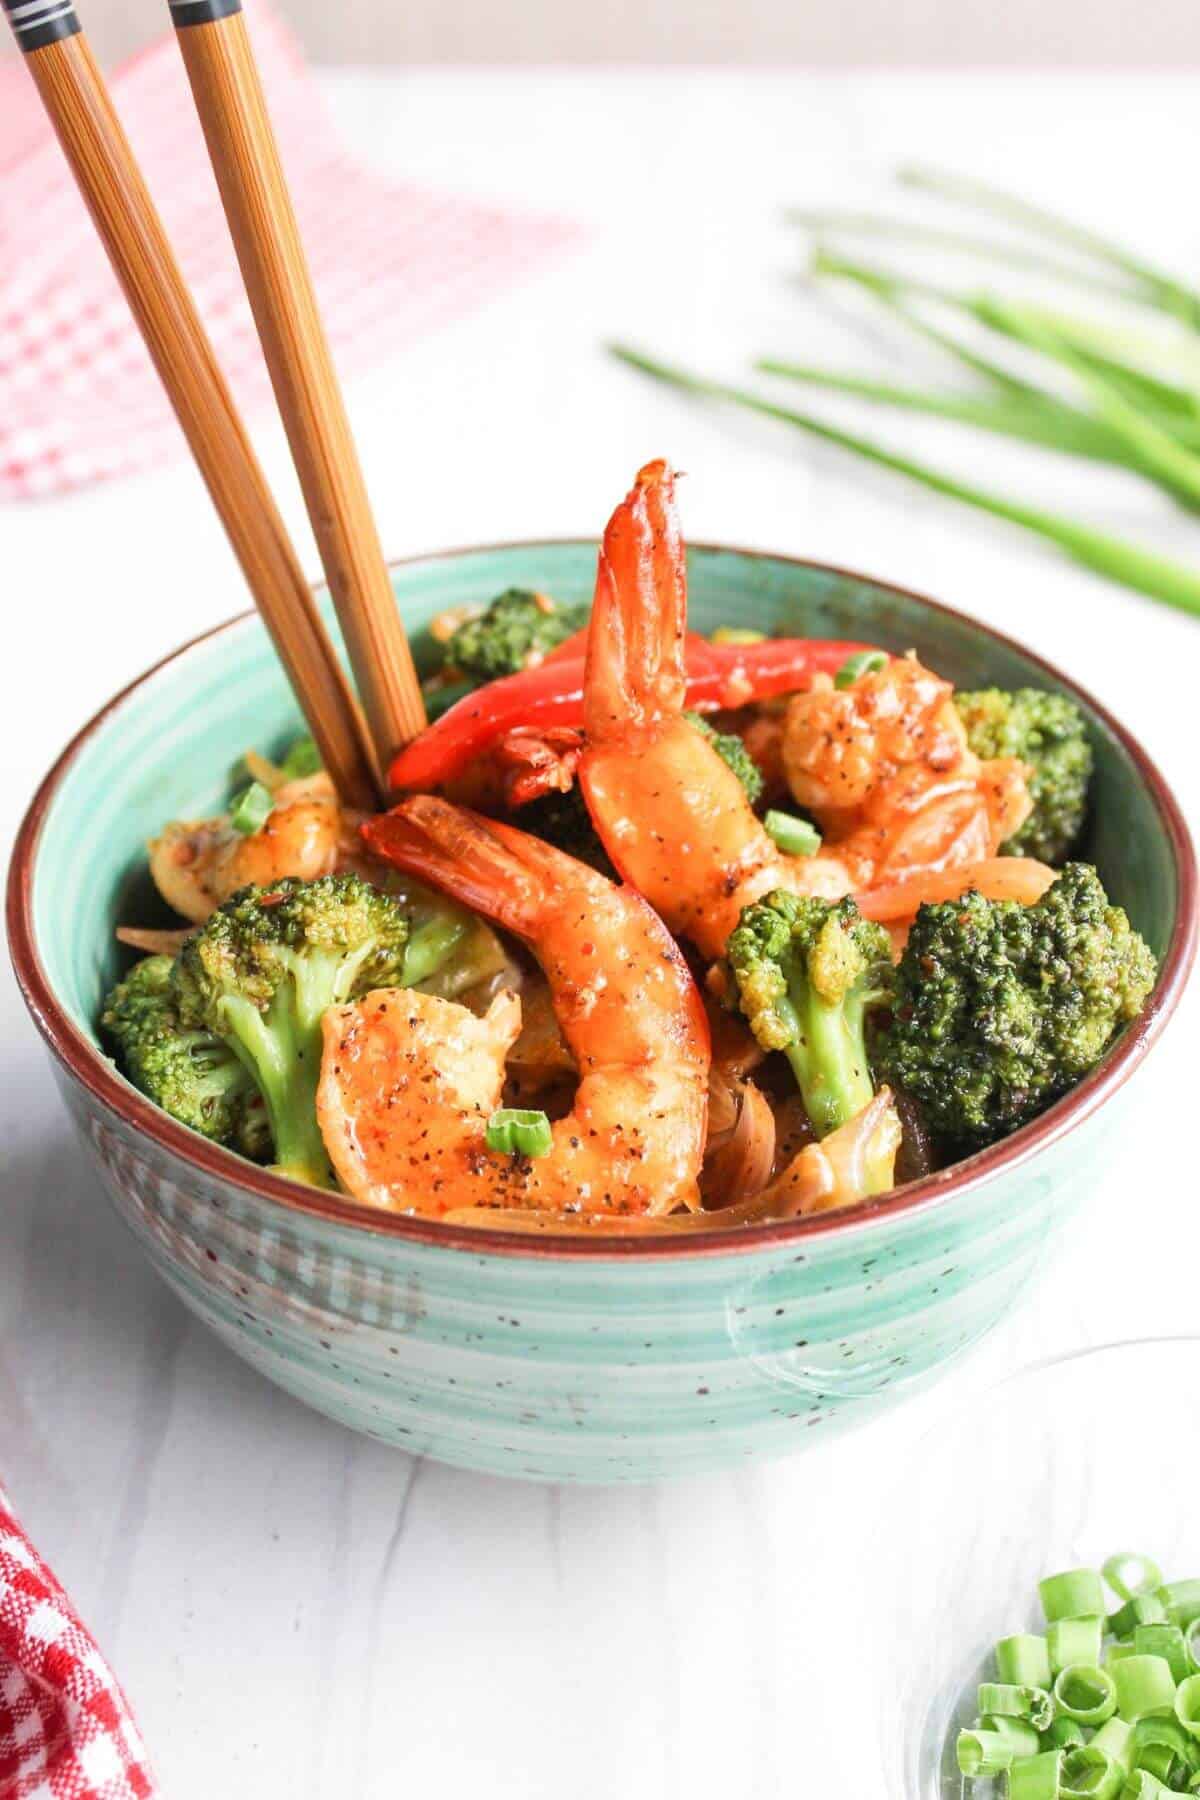 Chopsticks in bowl of shrimp and broccoli stir fry.